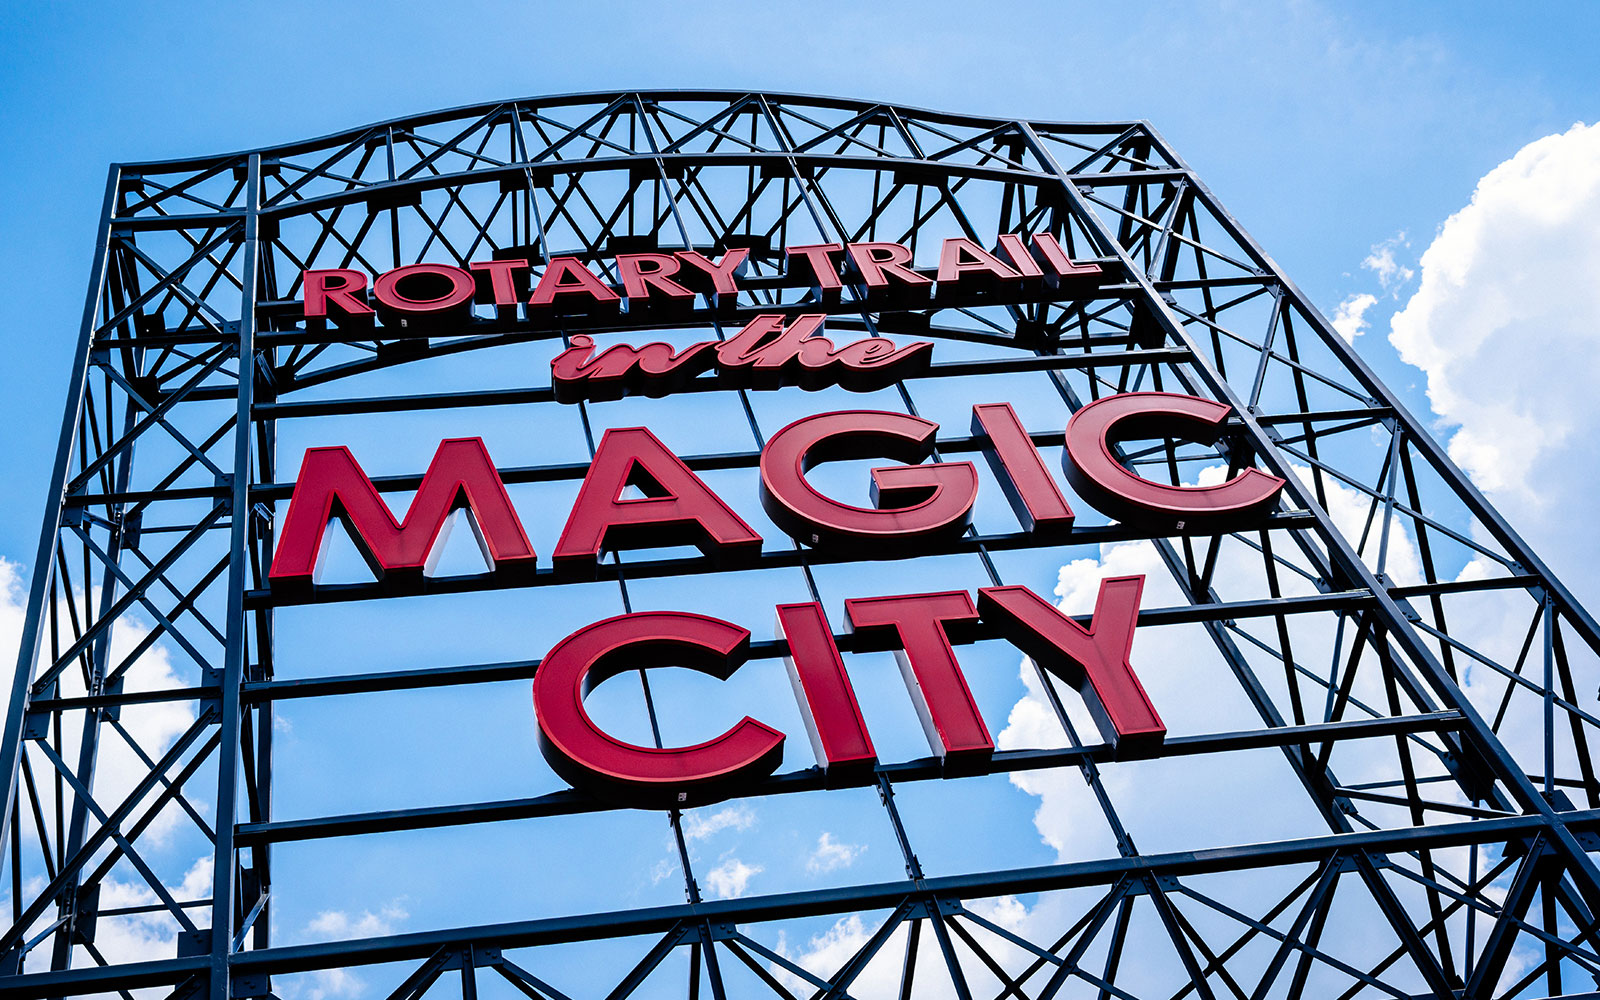 Birmingham Rotary Trail's Magic City Sign